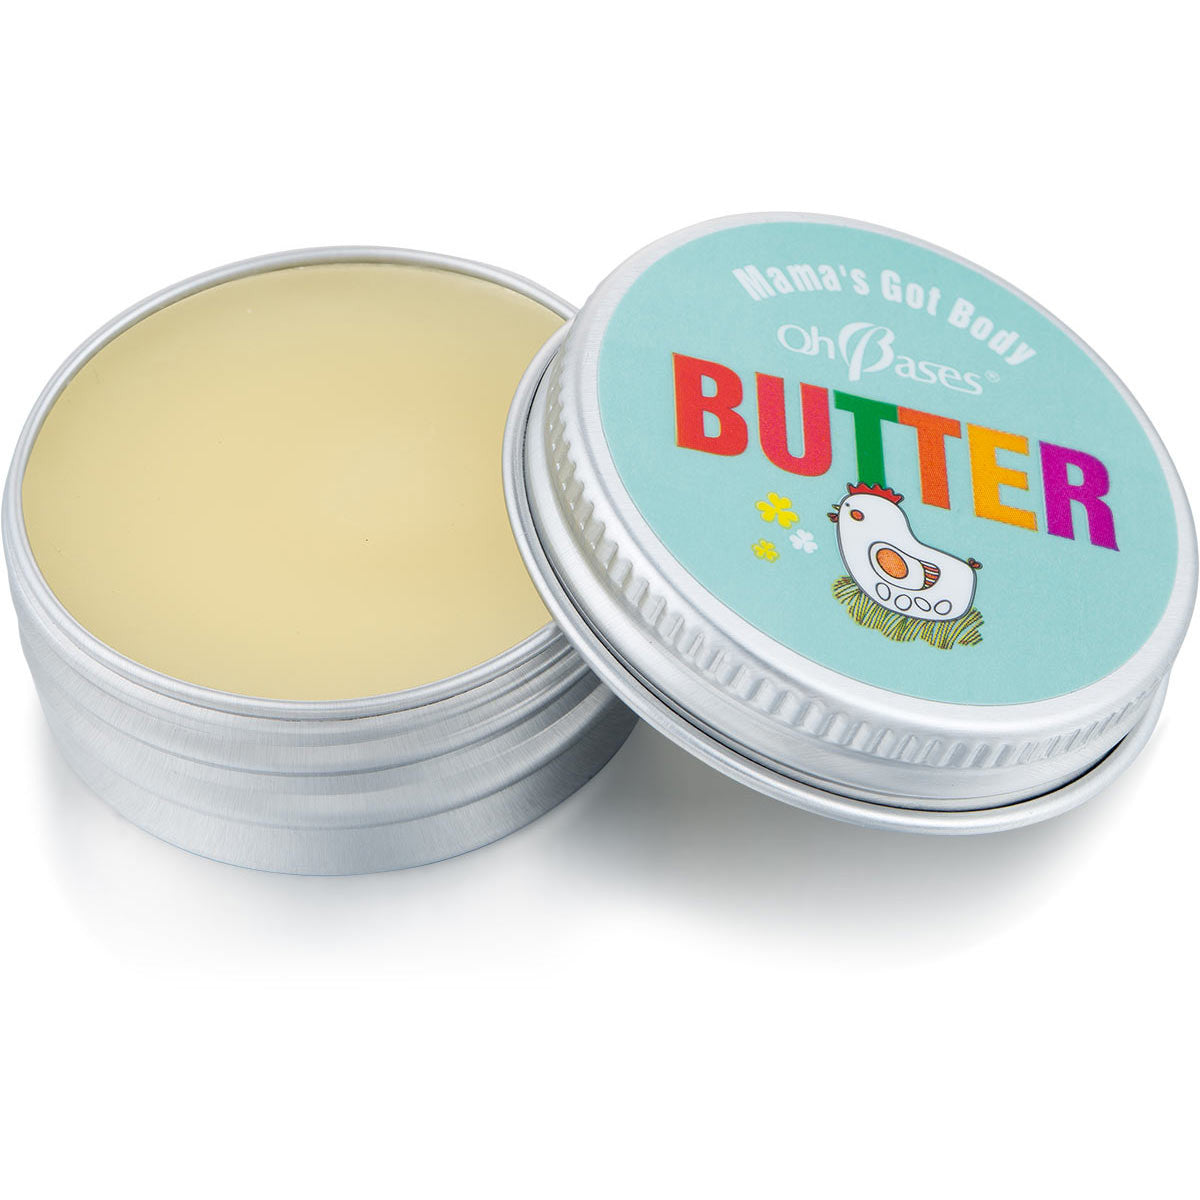 Mama's Got Body Butter - OhBases